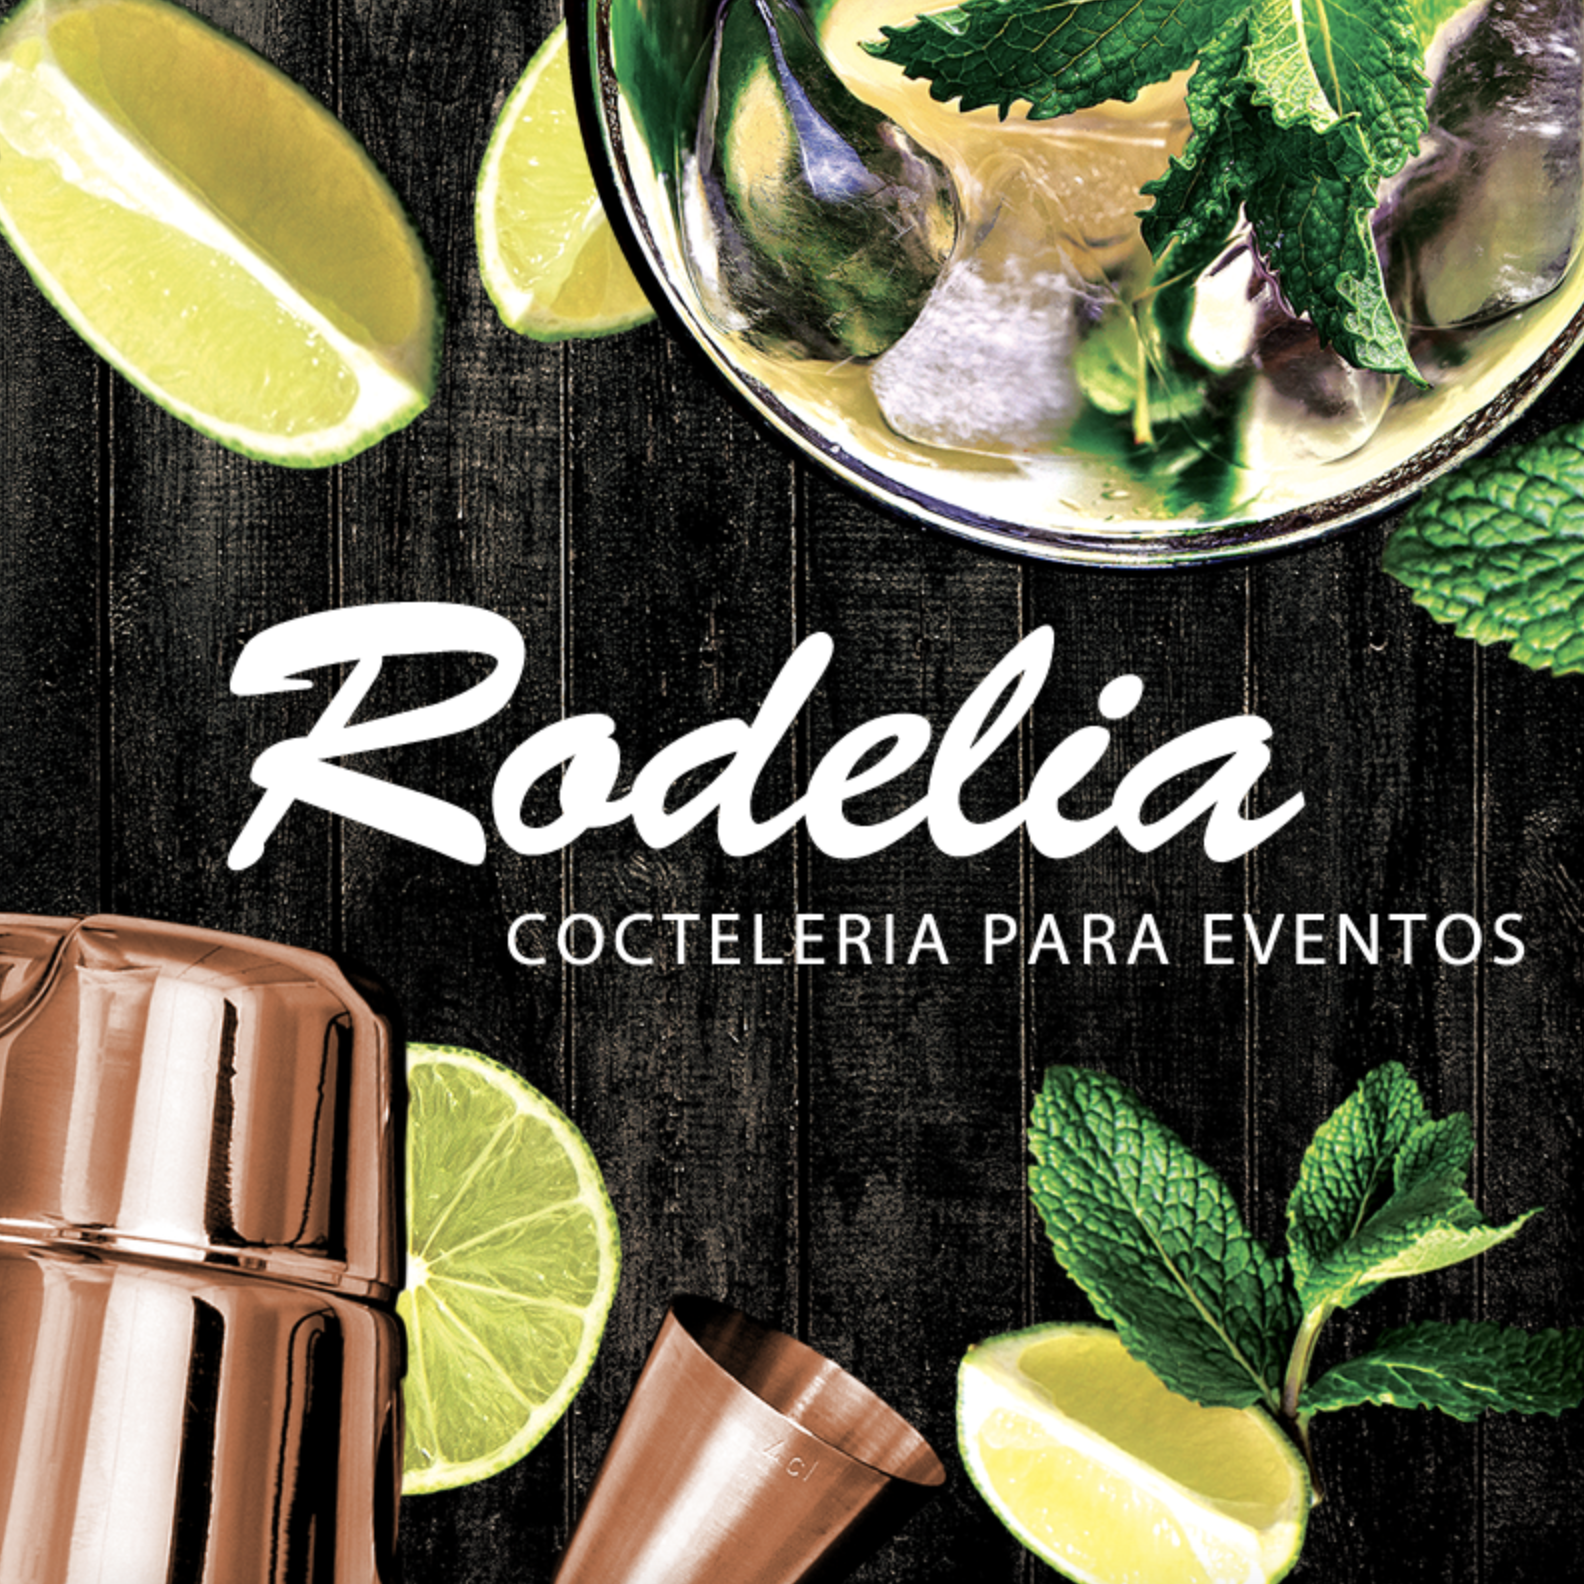 Rodelia Cocteleria